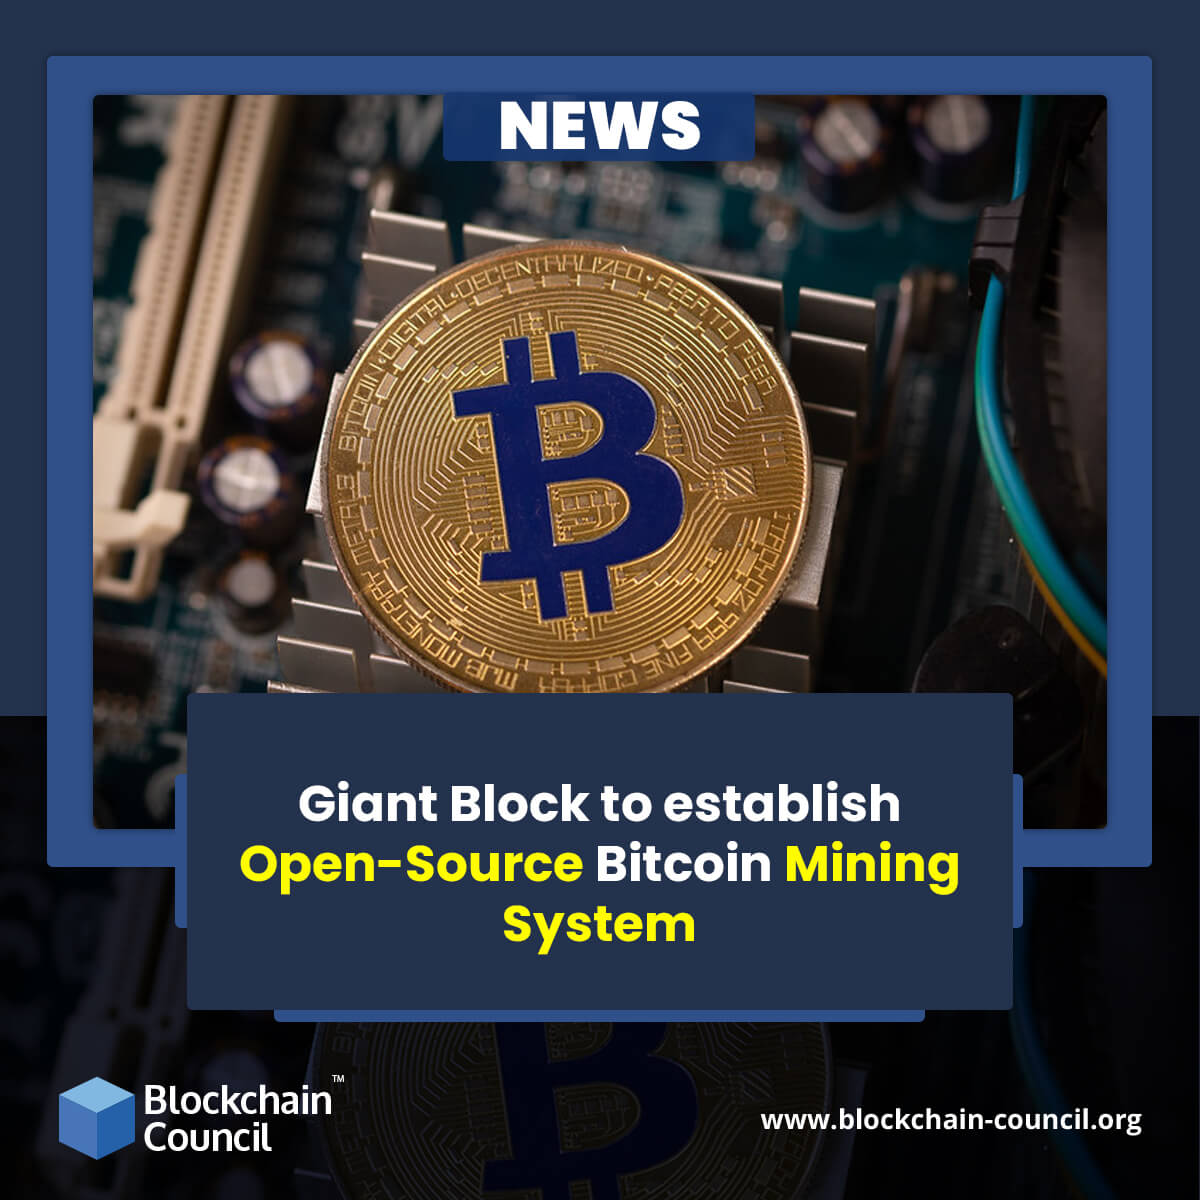 Giant Block to establish Open-Source Bitcoin Mining System